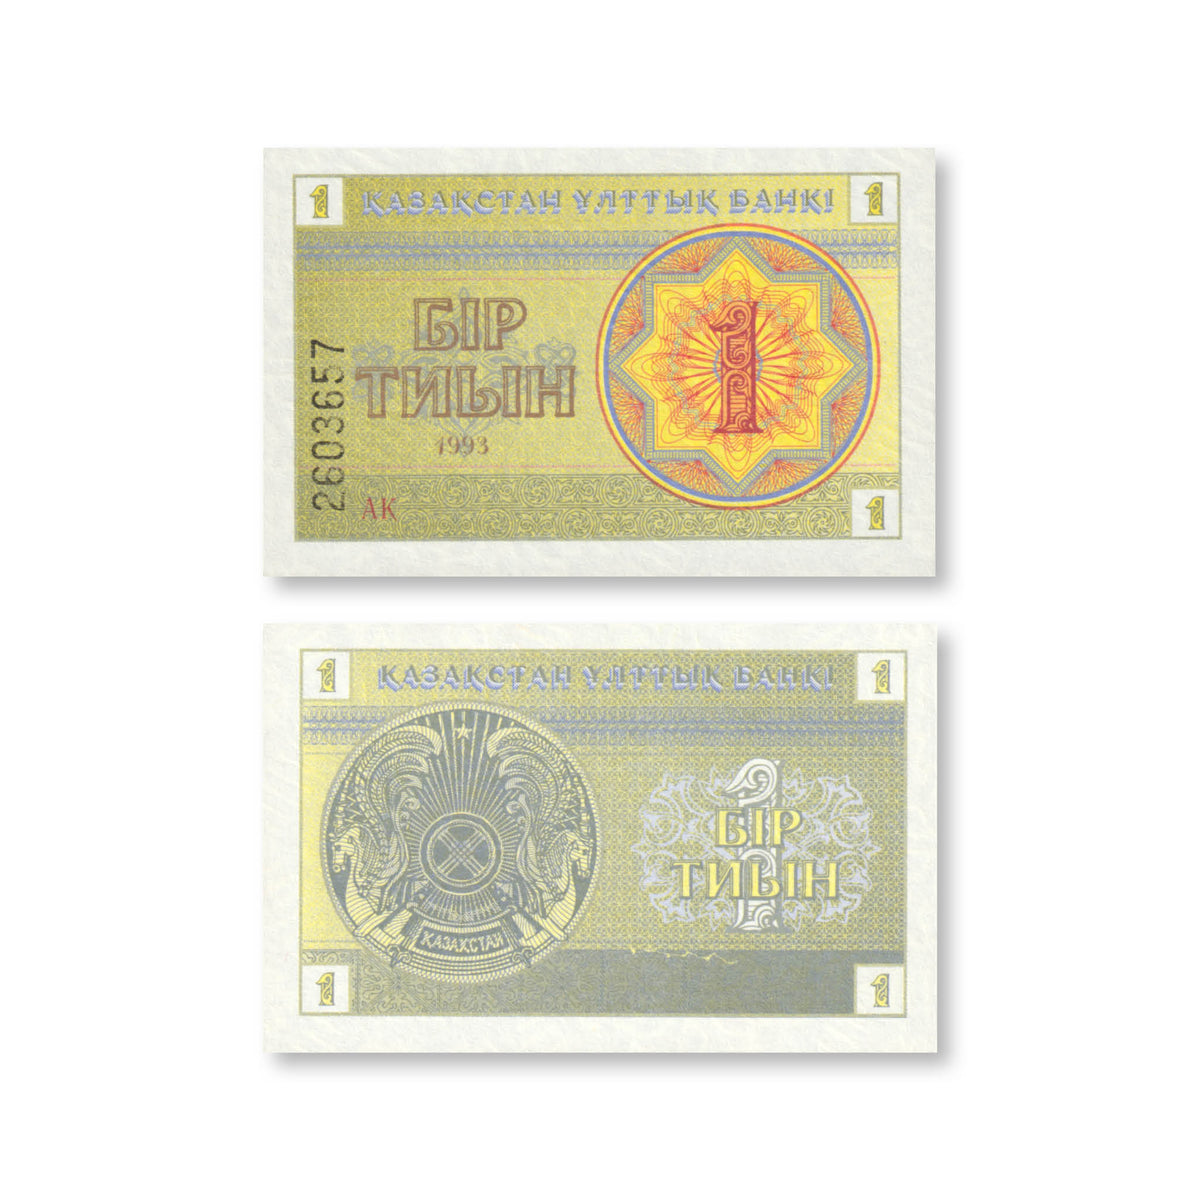 Kazakhstan 1 Tyiyn, 1993, B101b2, P1c, UNC - Robert's World Money - World Banknotes